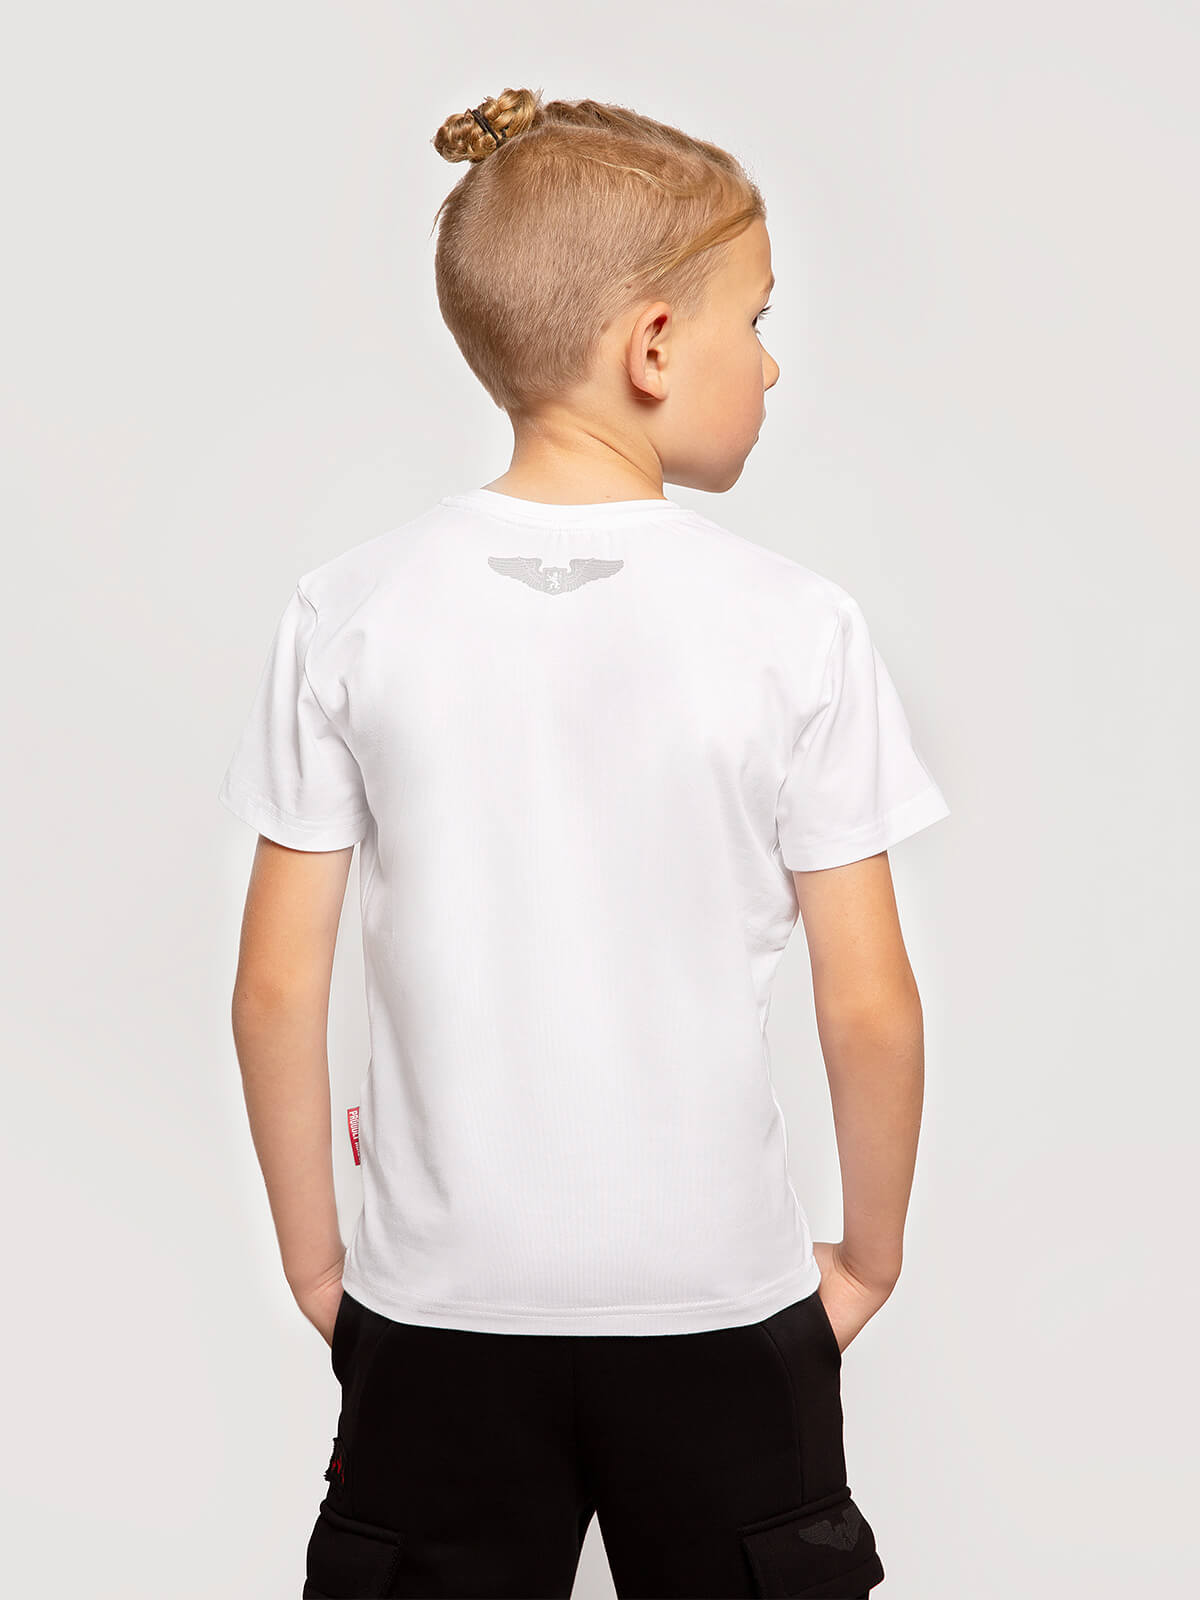 Kids T-Shirt An-225. Color white. 
Material: 95% cotton, 5% spandex.